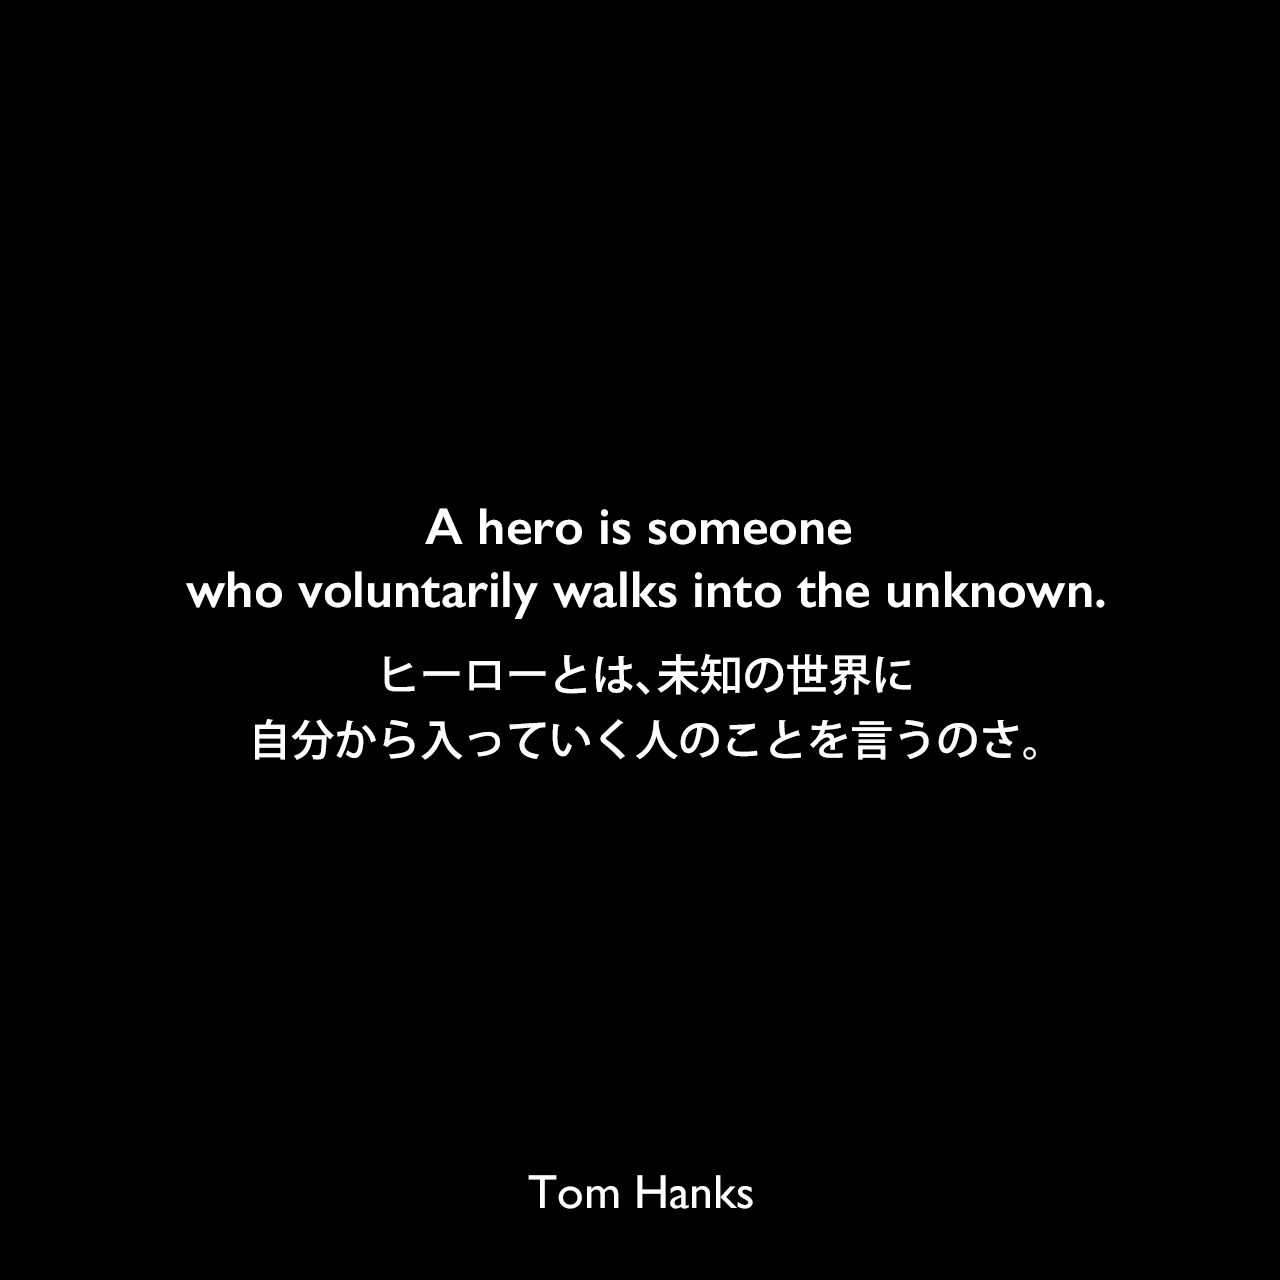 A hero is someone who voluntarily walks into the unknown.ヒーローとは、未知の世界に自分から入っていく人のことを言うのさ。Tom Hanks